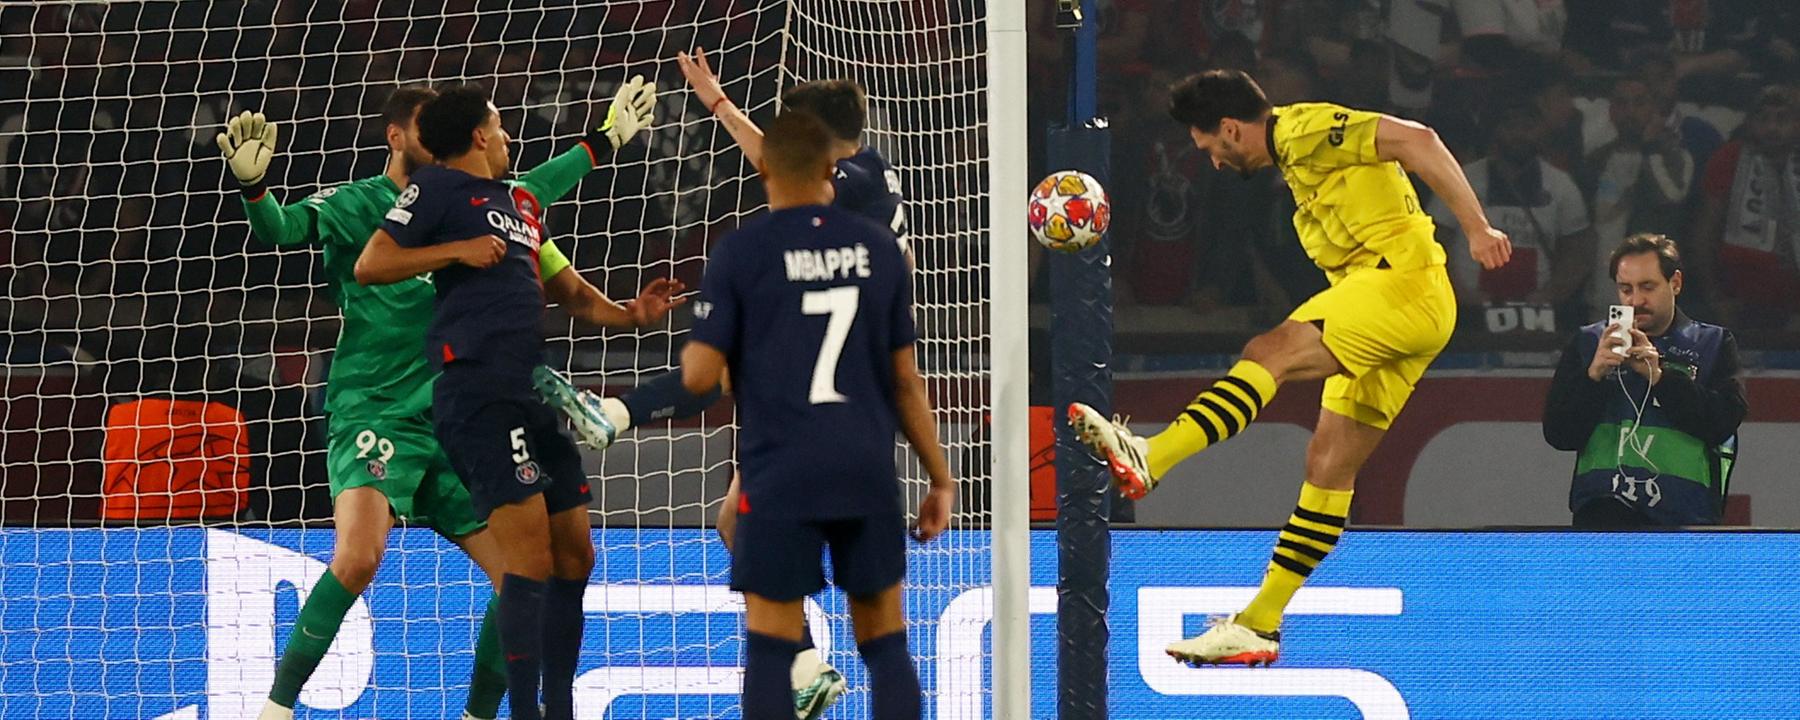 PSG - Borussia Dortmund: Mats Hummels köpft das 1:0